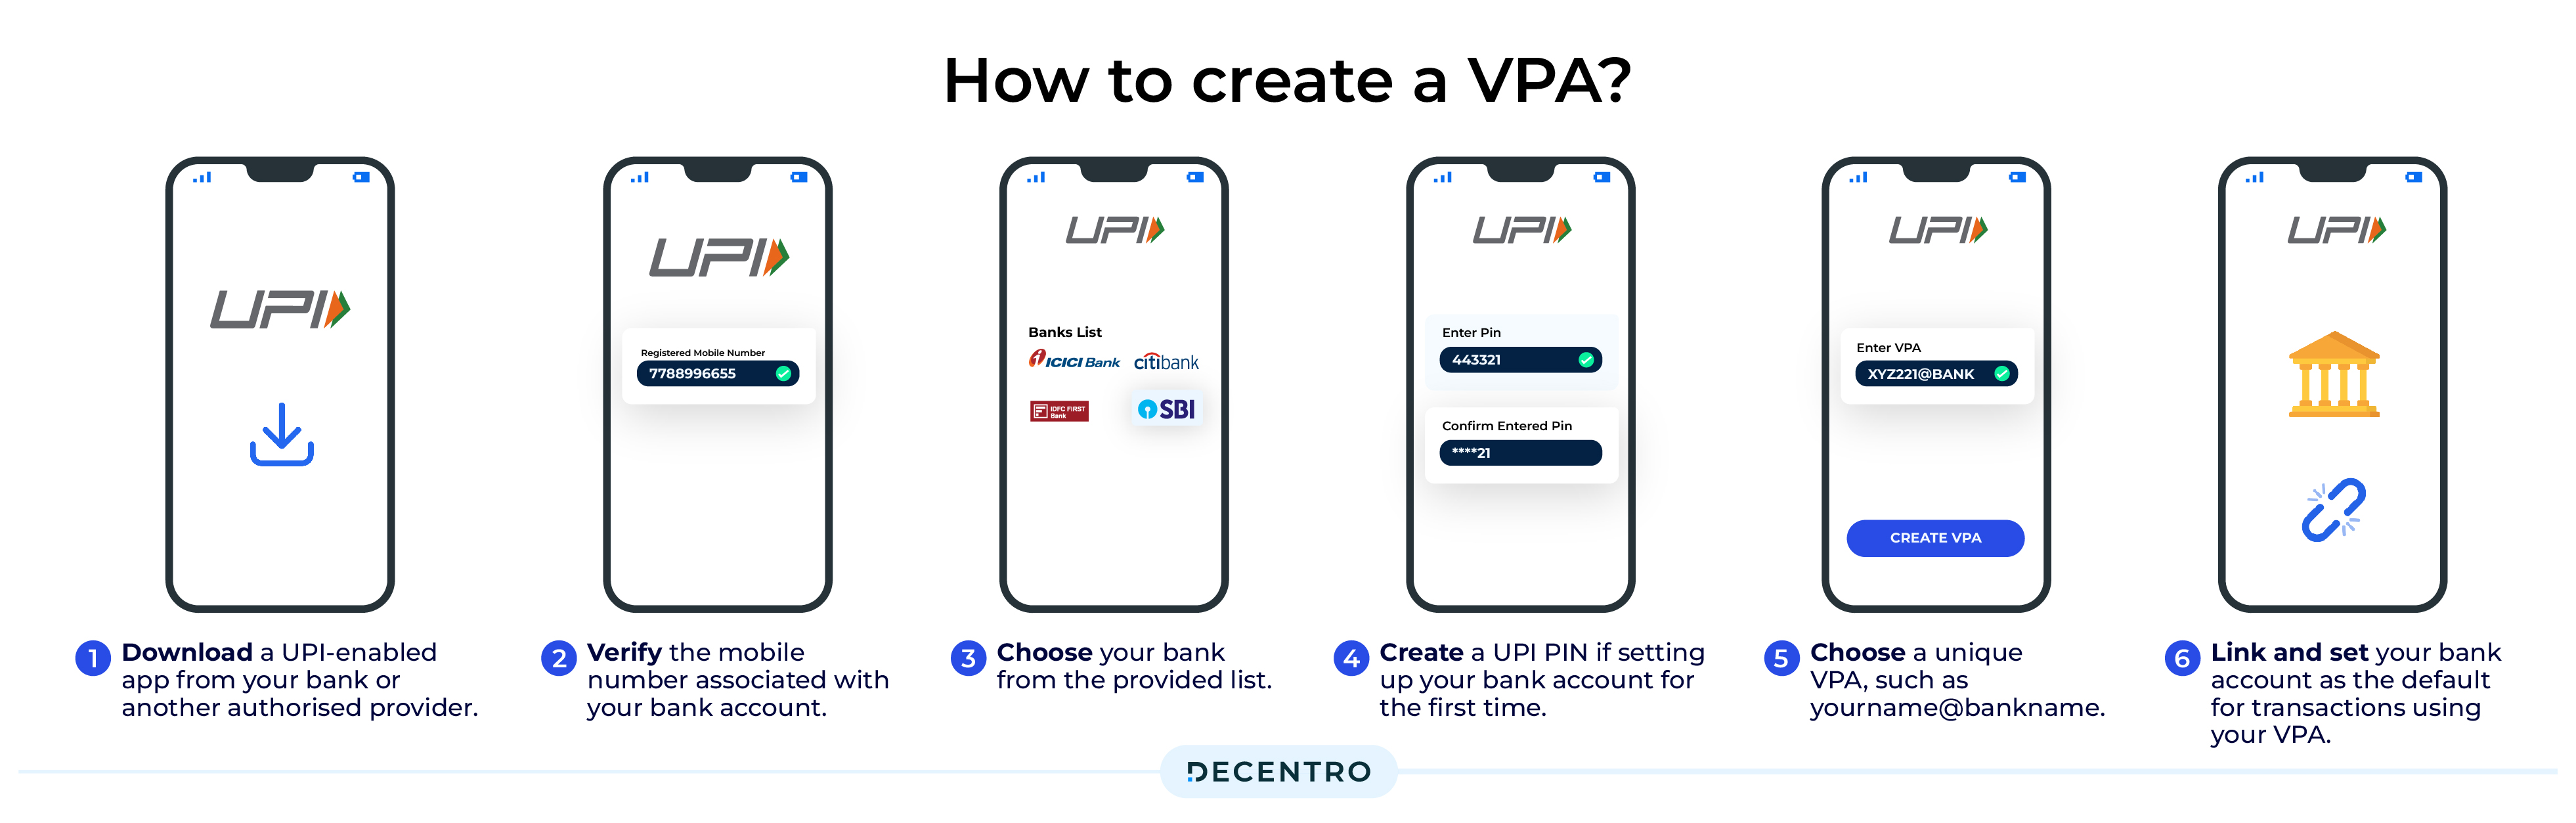 How to create a VPA?